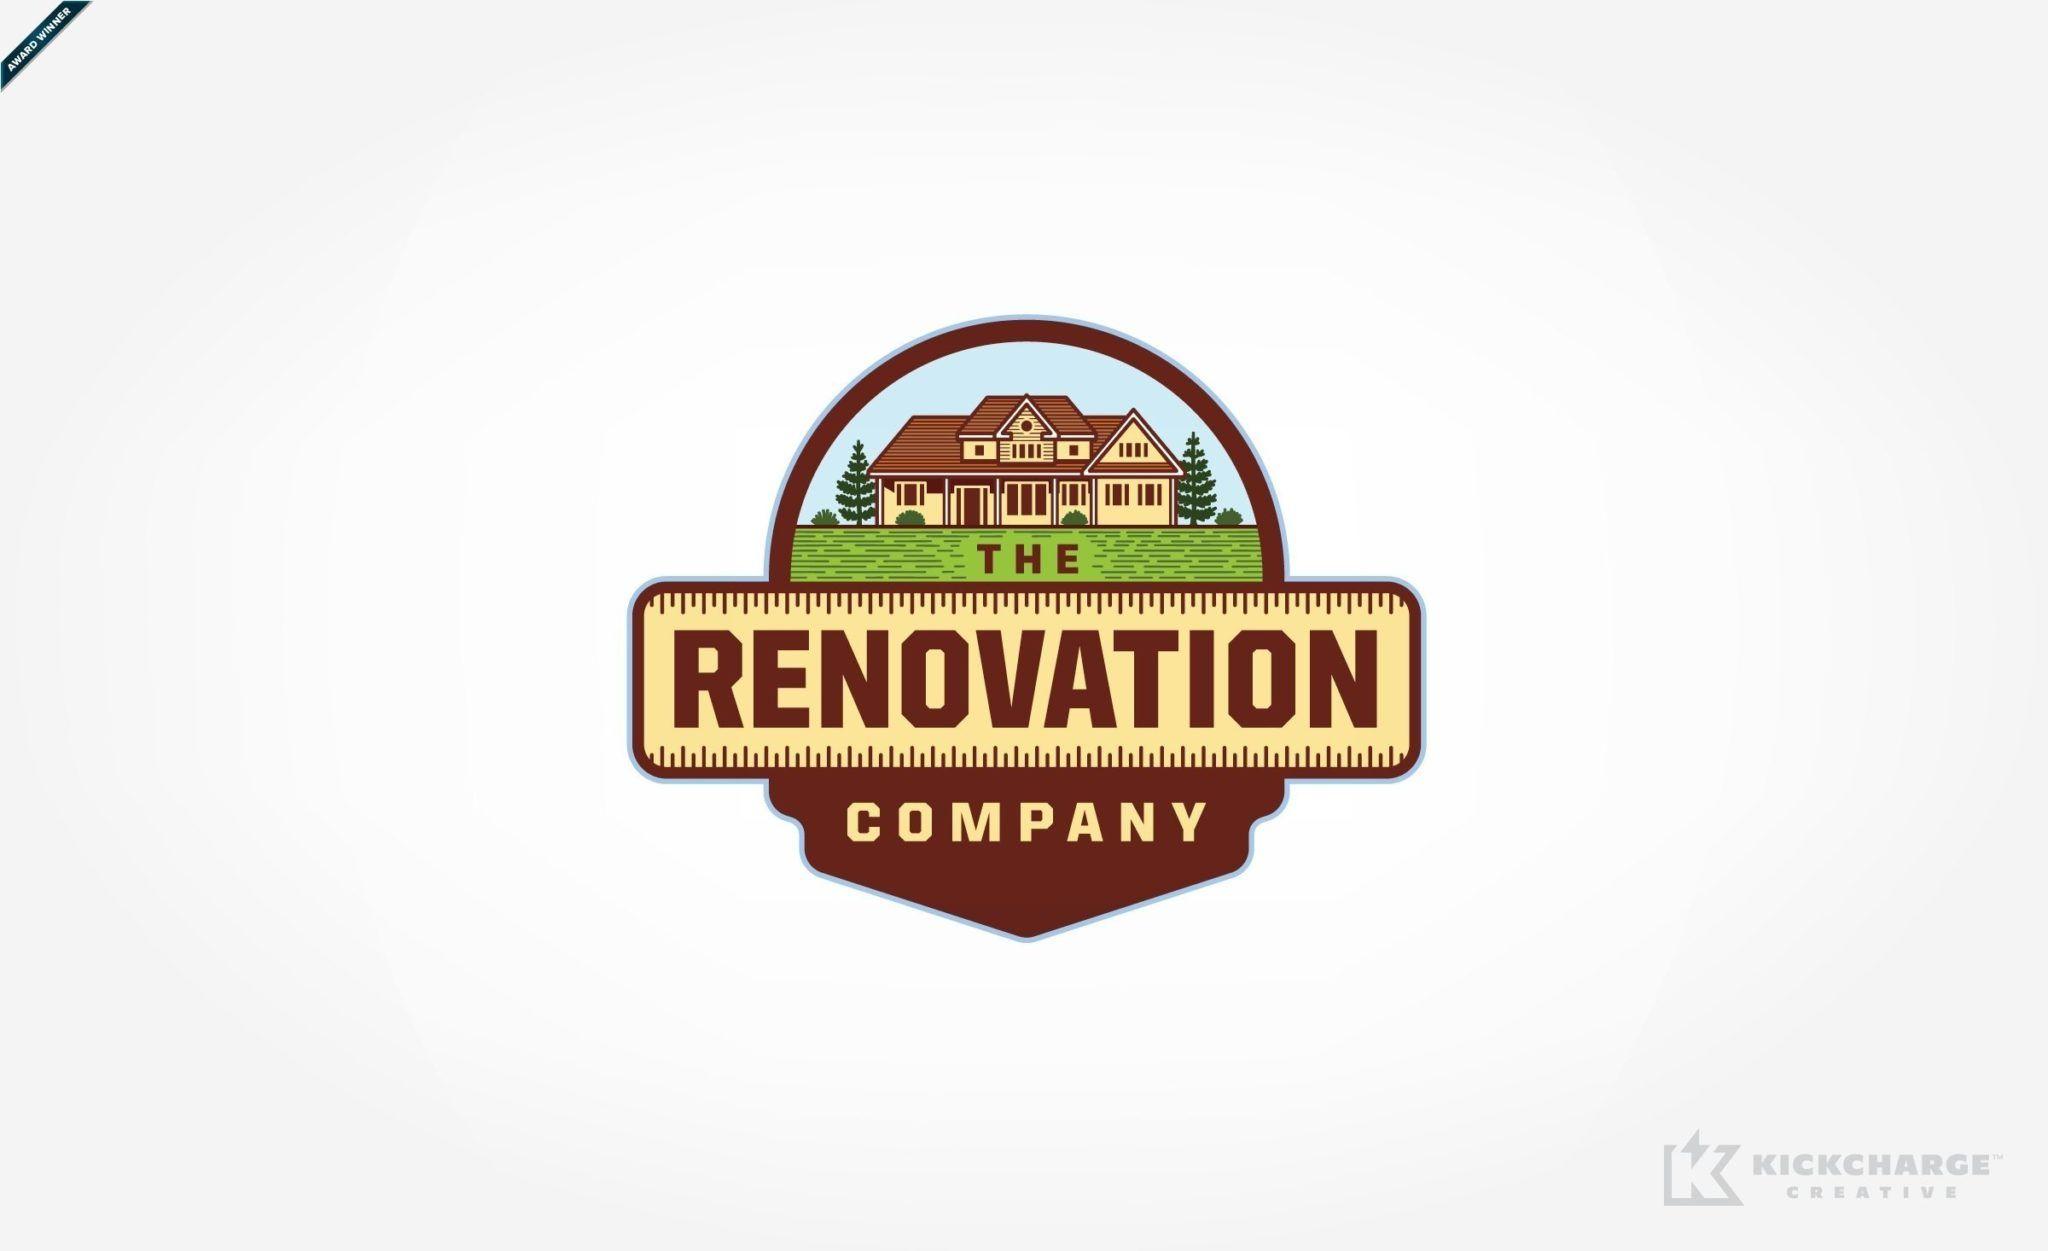 Renovation Company Logo - The Renovation Company - KickCharge Creative | kickcharge.com ...